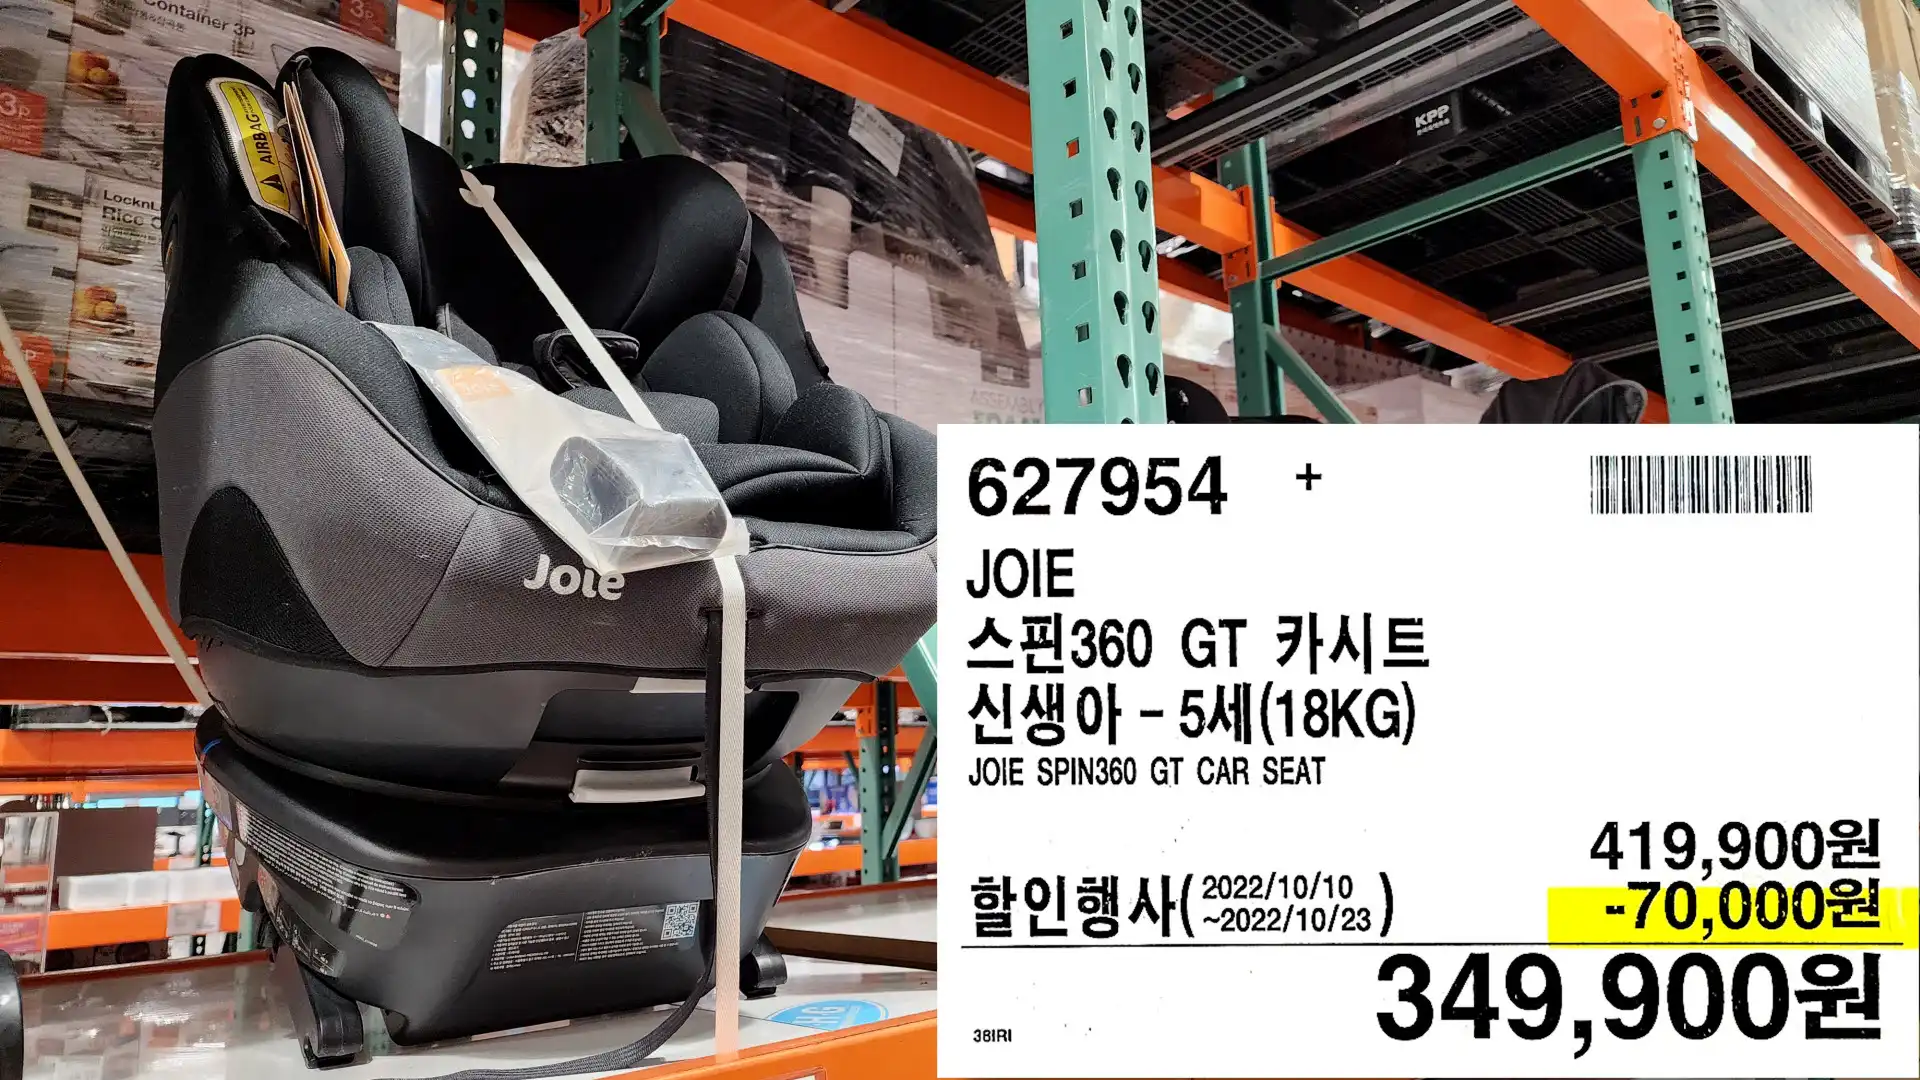 JOIE
스핀360 GT 카시트
신생아 - 5세(18KG)
JOIE SPIN360 GT CAR SEAT
349,900원